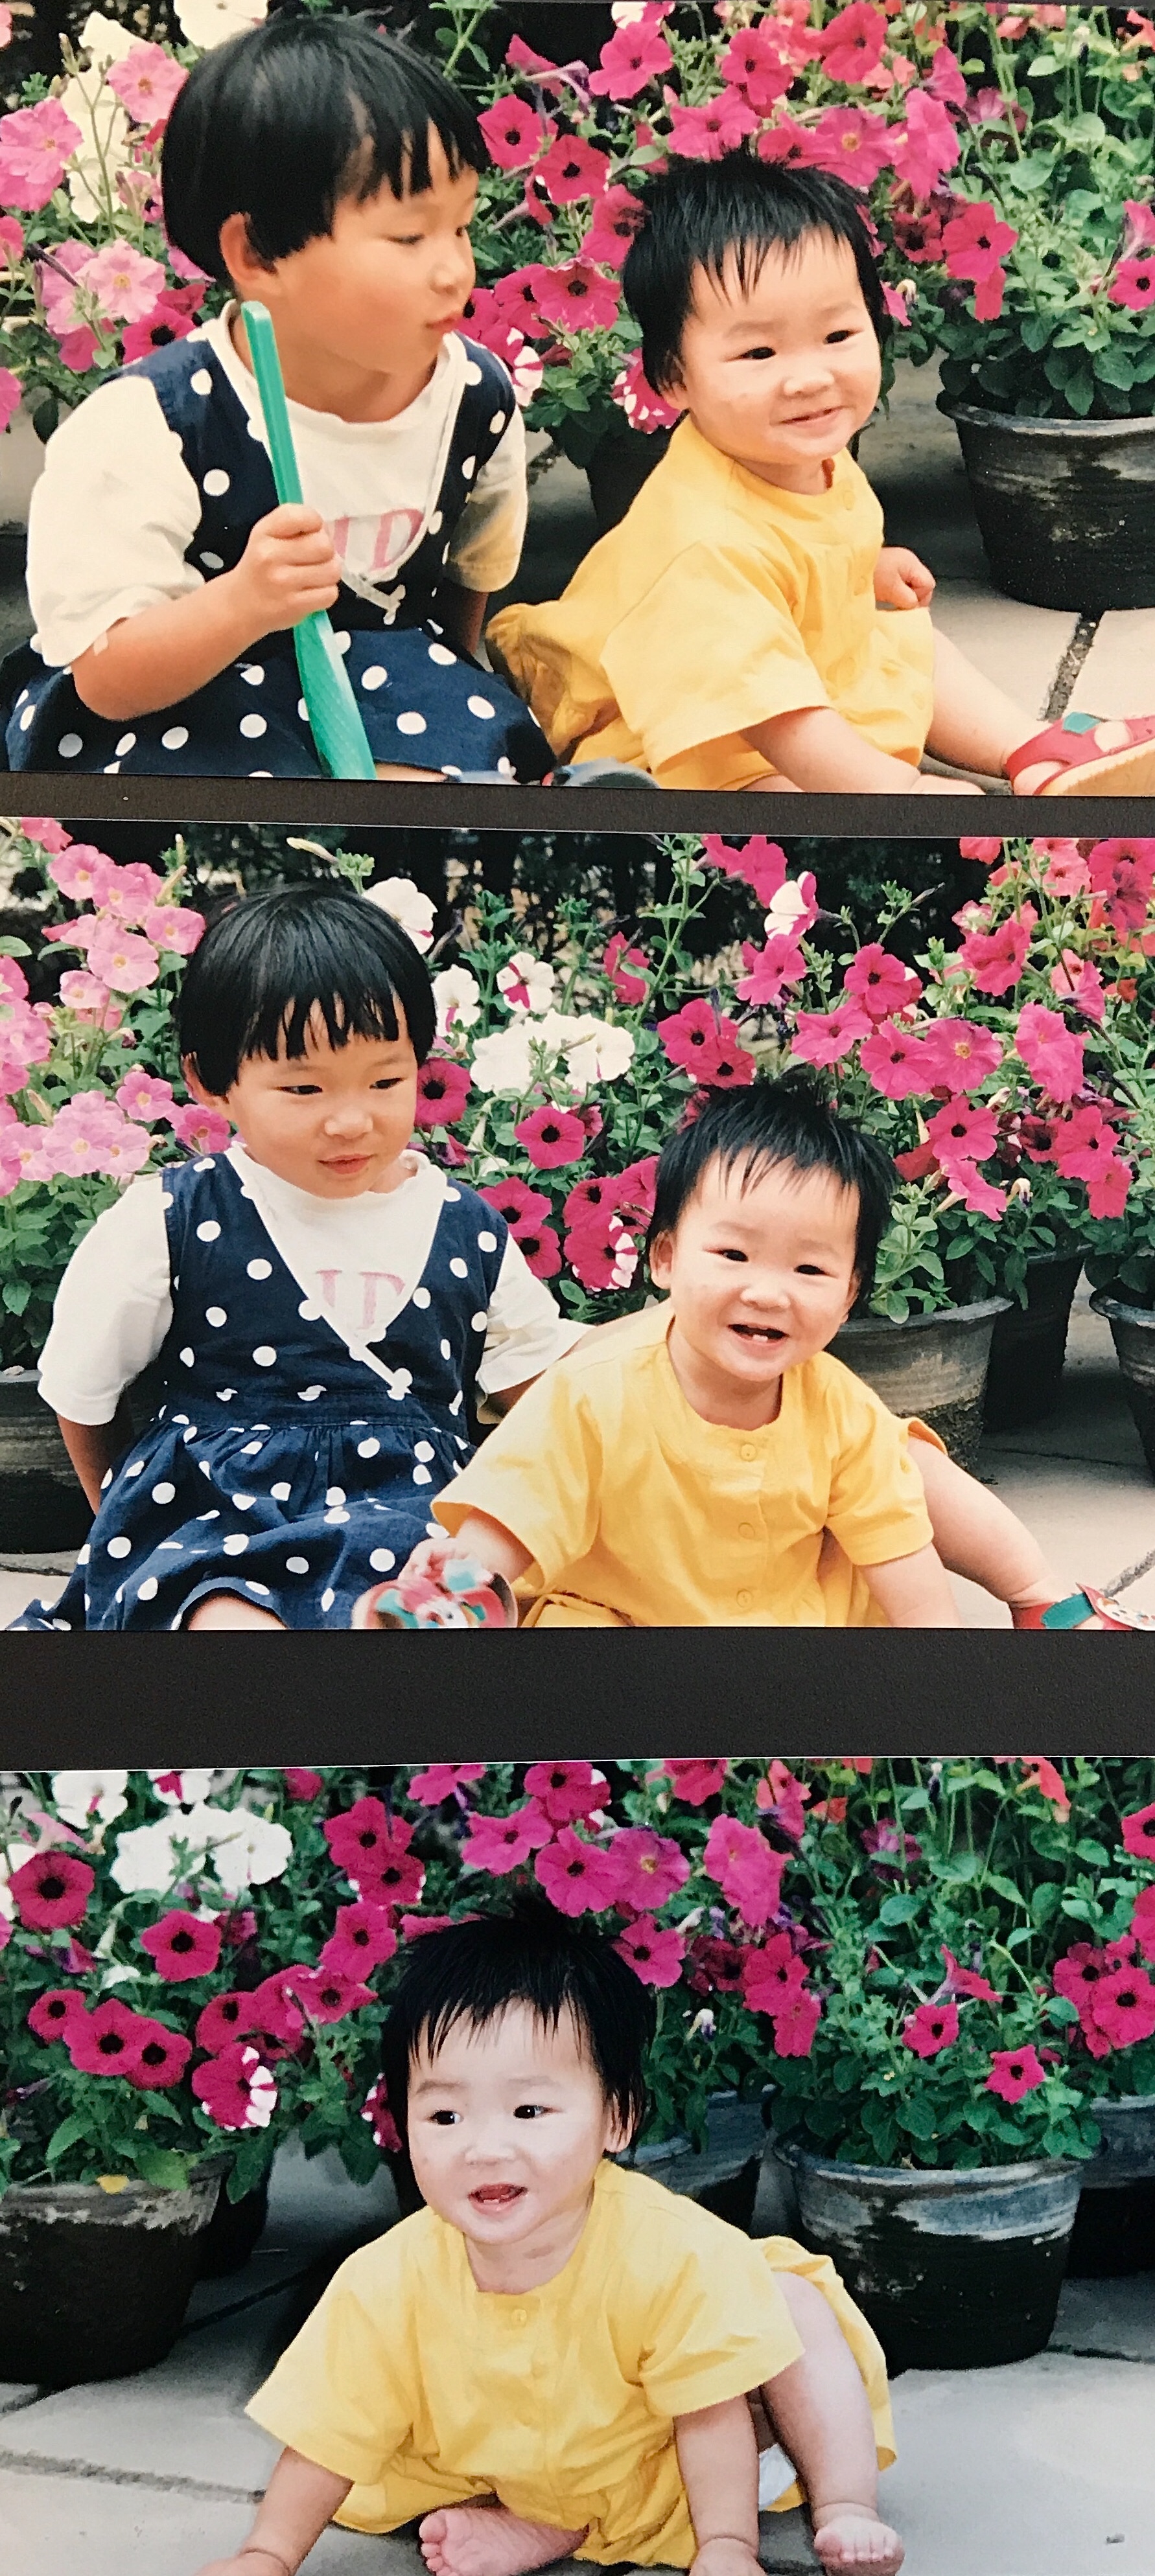 Xiangxia van den Ham, Dumpling Stories – three photos of two little kids in front of fuscia flower pots. Xiangxia's sister (left) is wearing a blue and white polka dot dress. Xiangxia a yellow t-shirt.